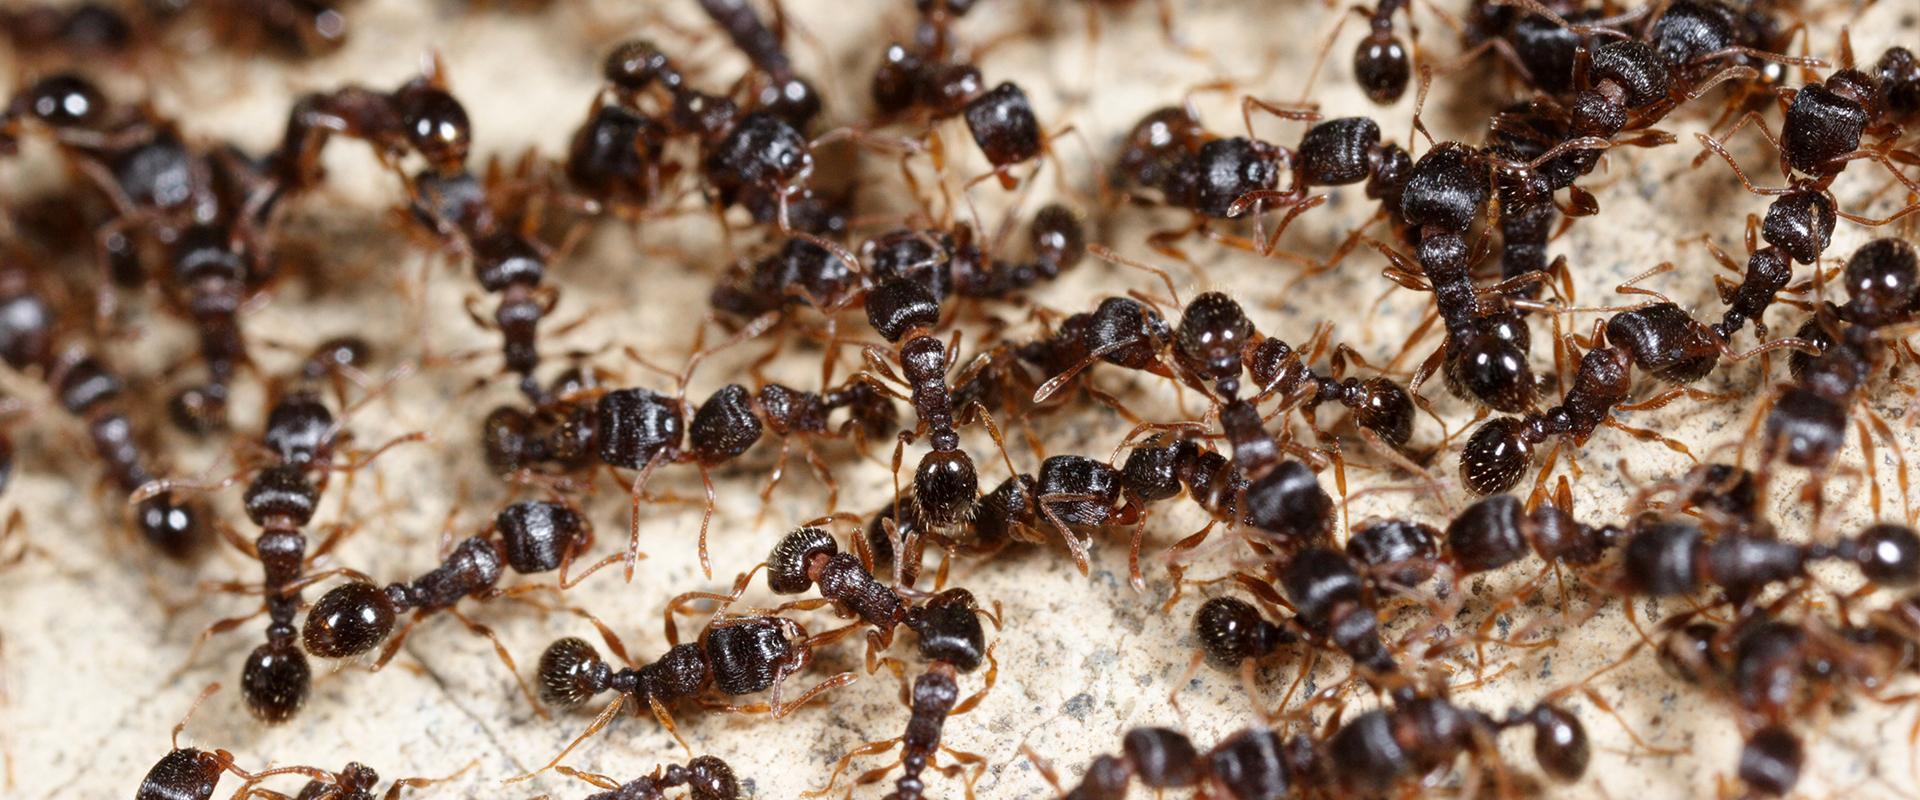 brown ants on gravel